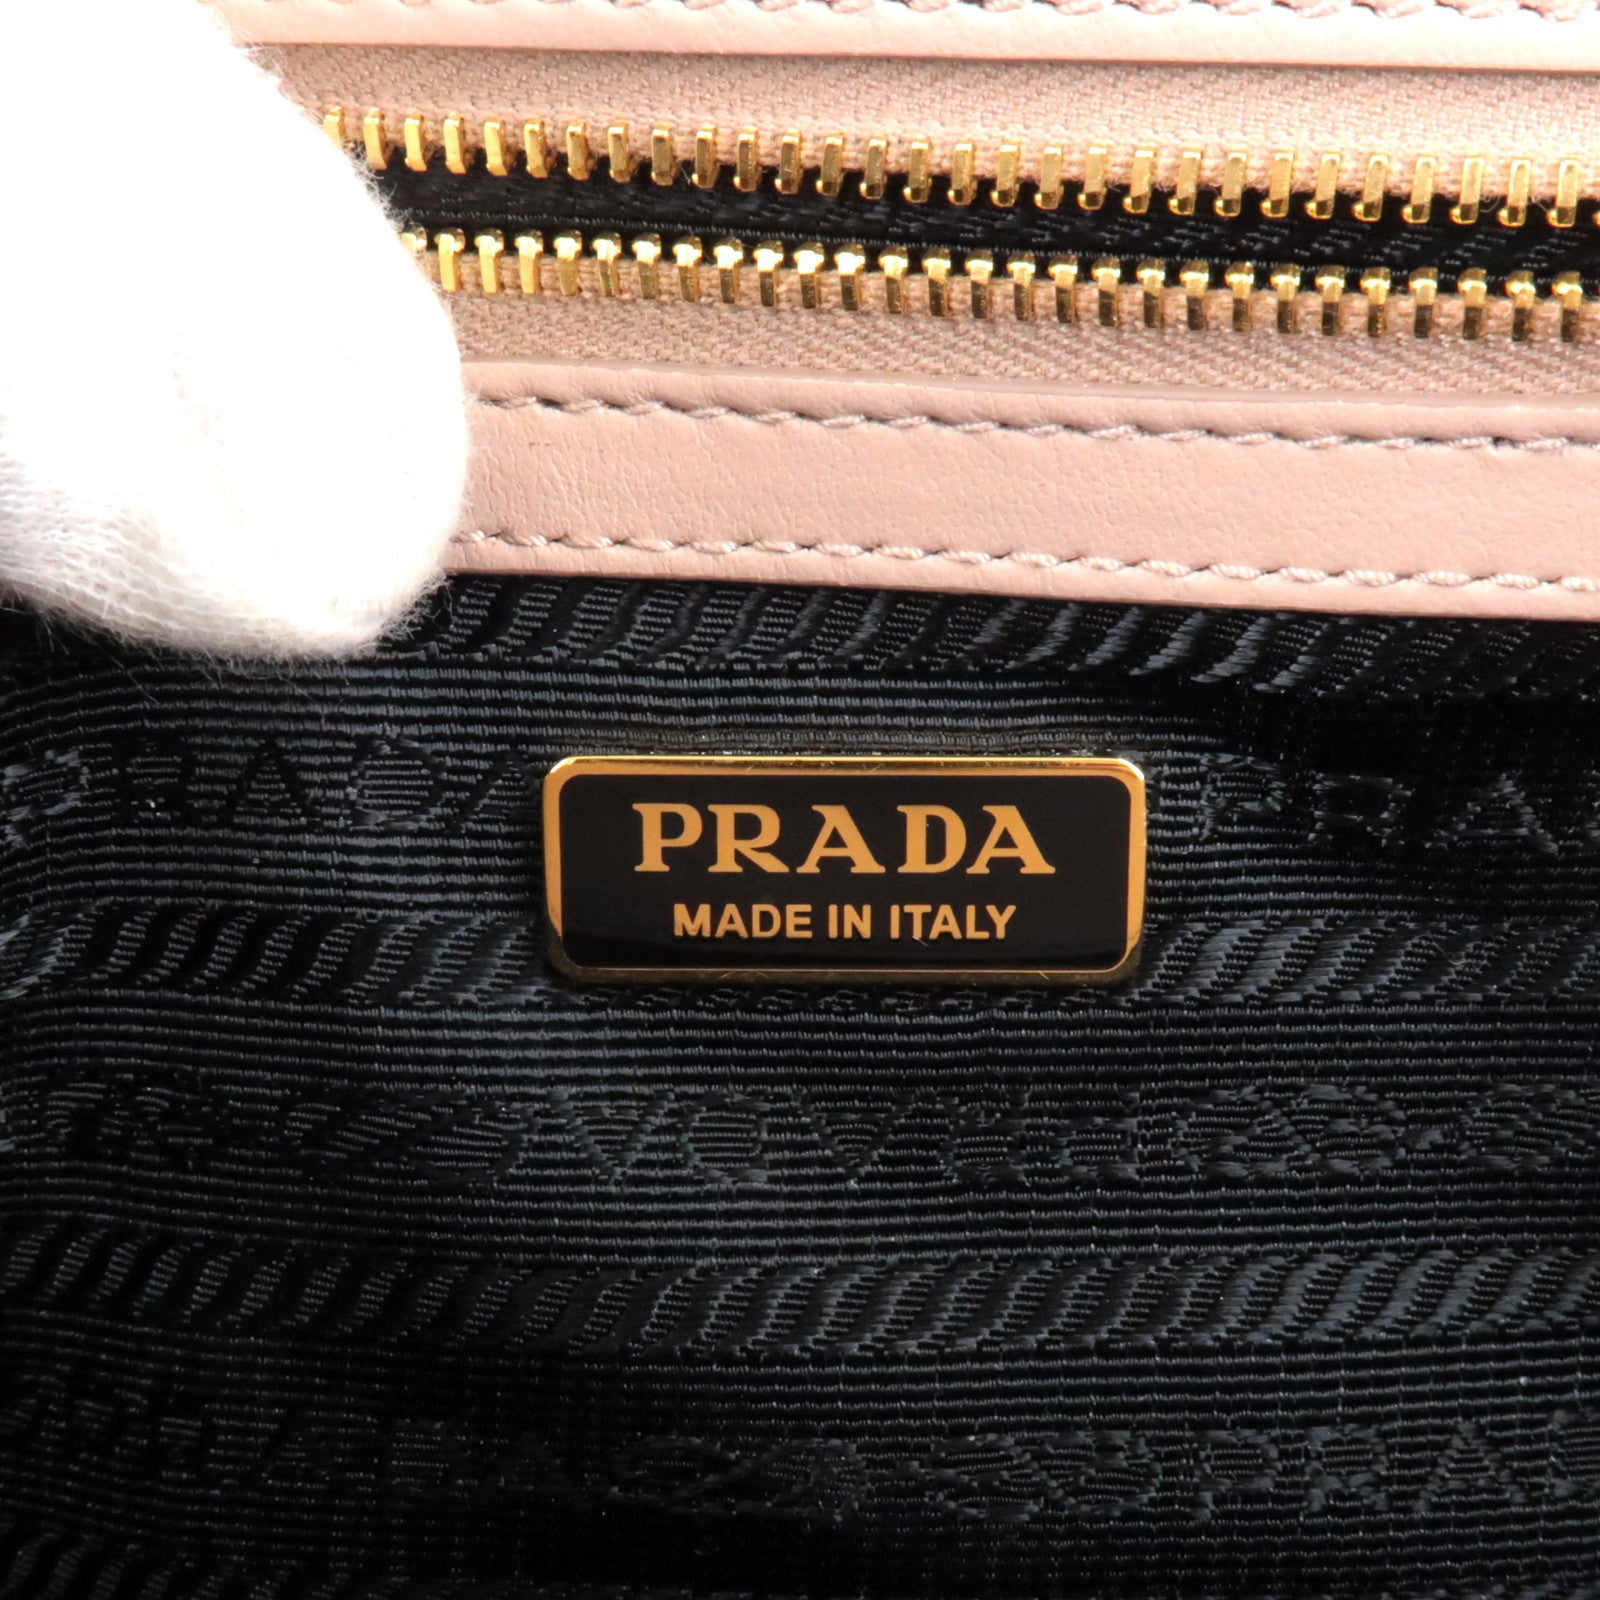 Prada Galleria leather micro bag for Women - Pink in Bahrain